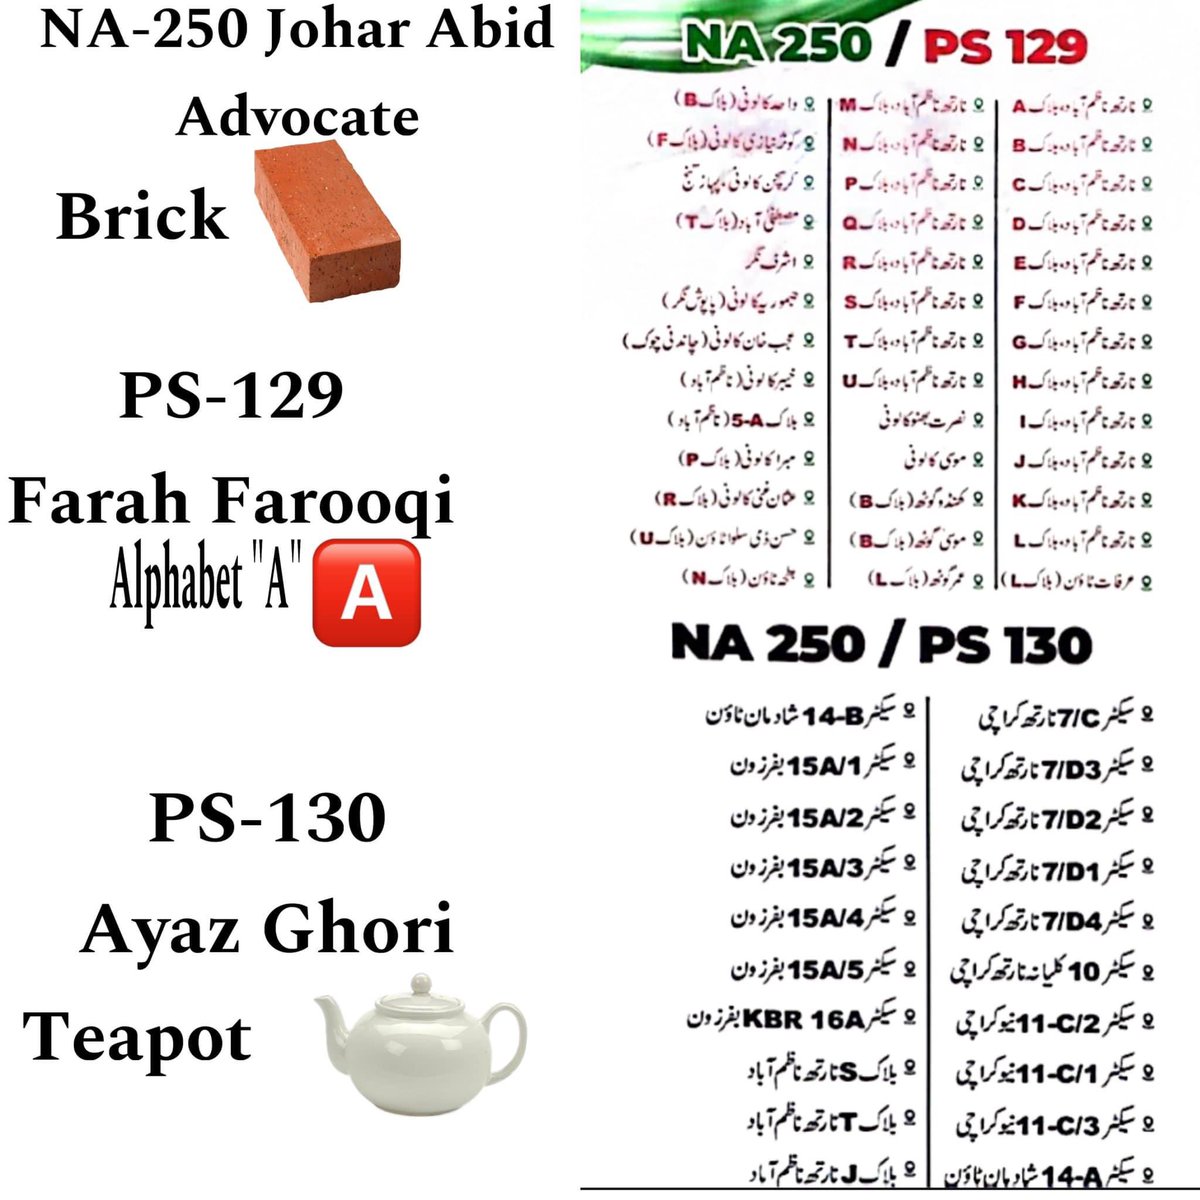 North Nazimabad know your candidates and their symbols.
NA-250 Johar Abid 🧱
PS-129 Farah farooqi 🅰️
PS-130 Ayaz Ghori 🫖
#VoteSirfAltafKa